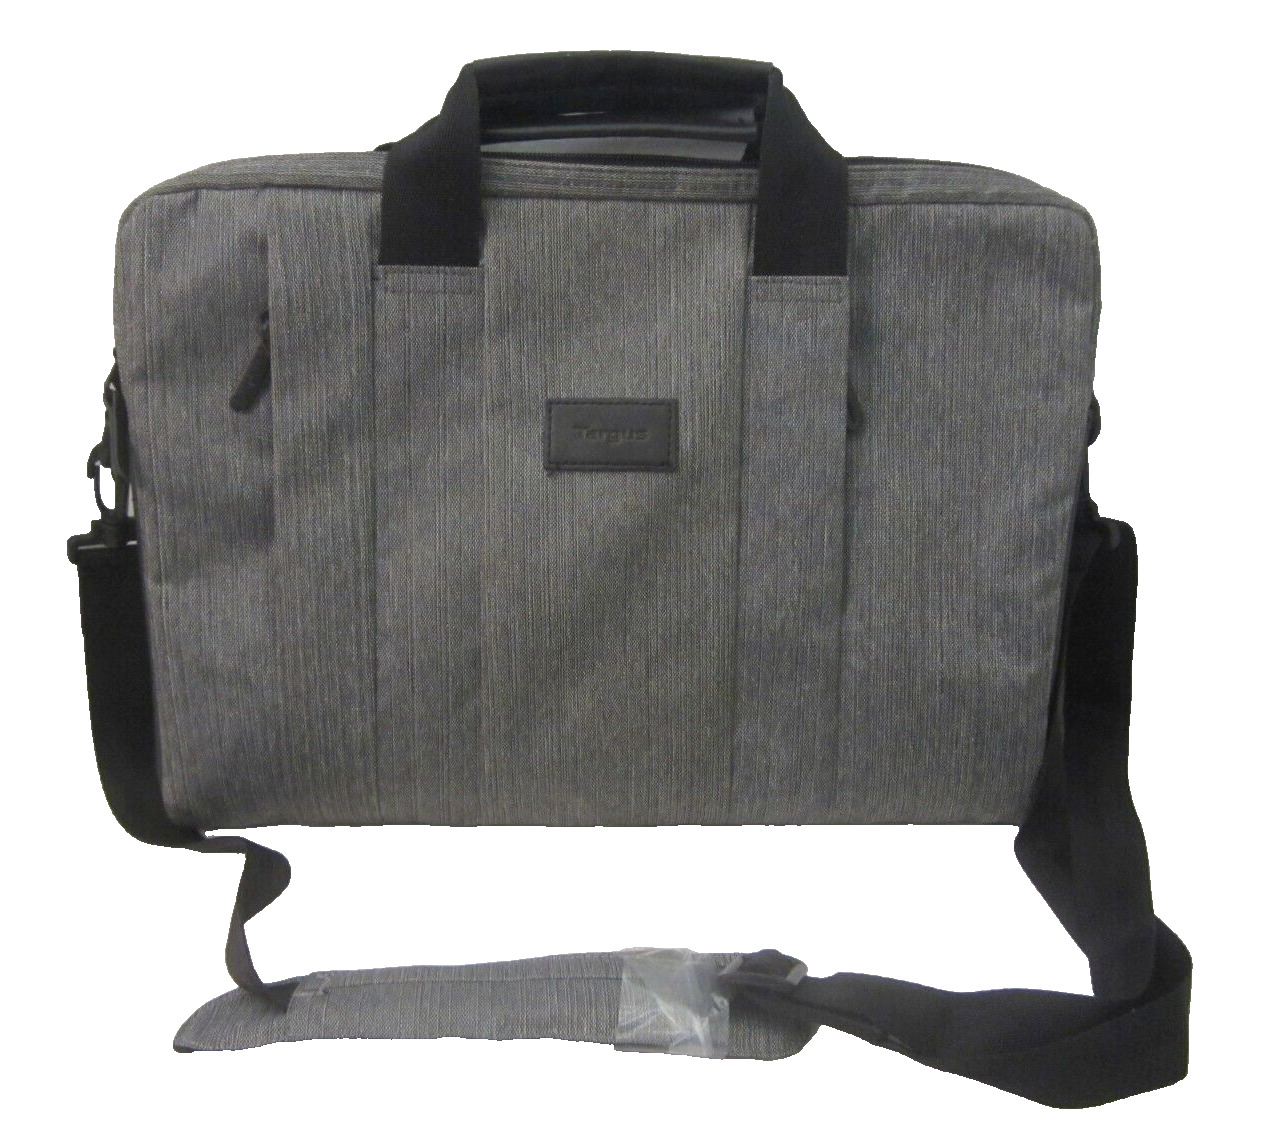 Targus City Smart Laptop Sleeve Slipcase Briefcase #TSS59404 Fits 15.6